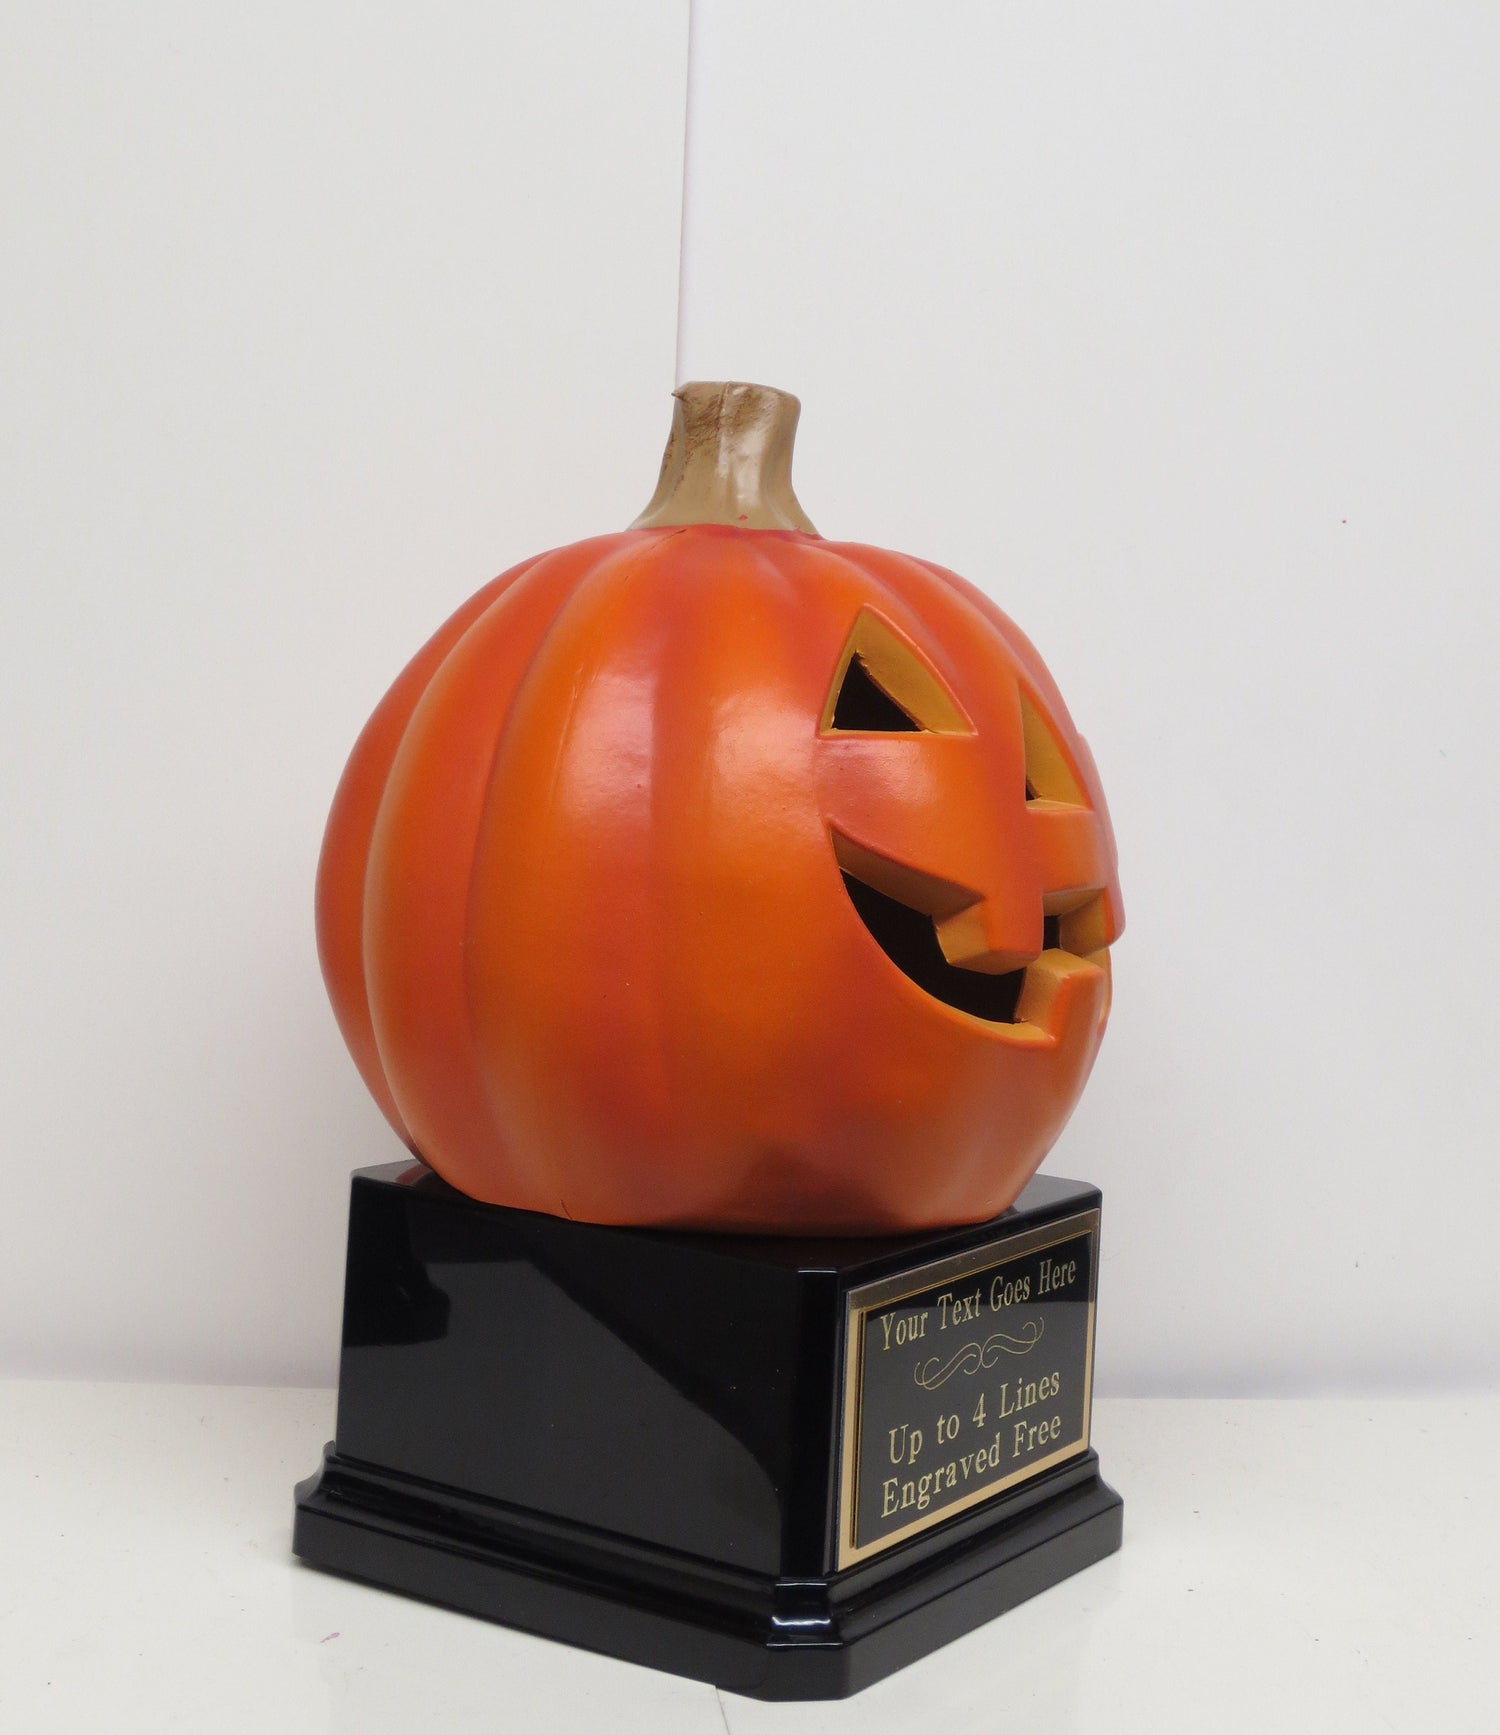 Halloween Trophy Halloween Trophies Trophy Pumpkin Carving Contest Trophy or Best Costume Contest Jack O Lantern Halloween Decor